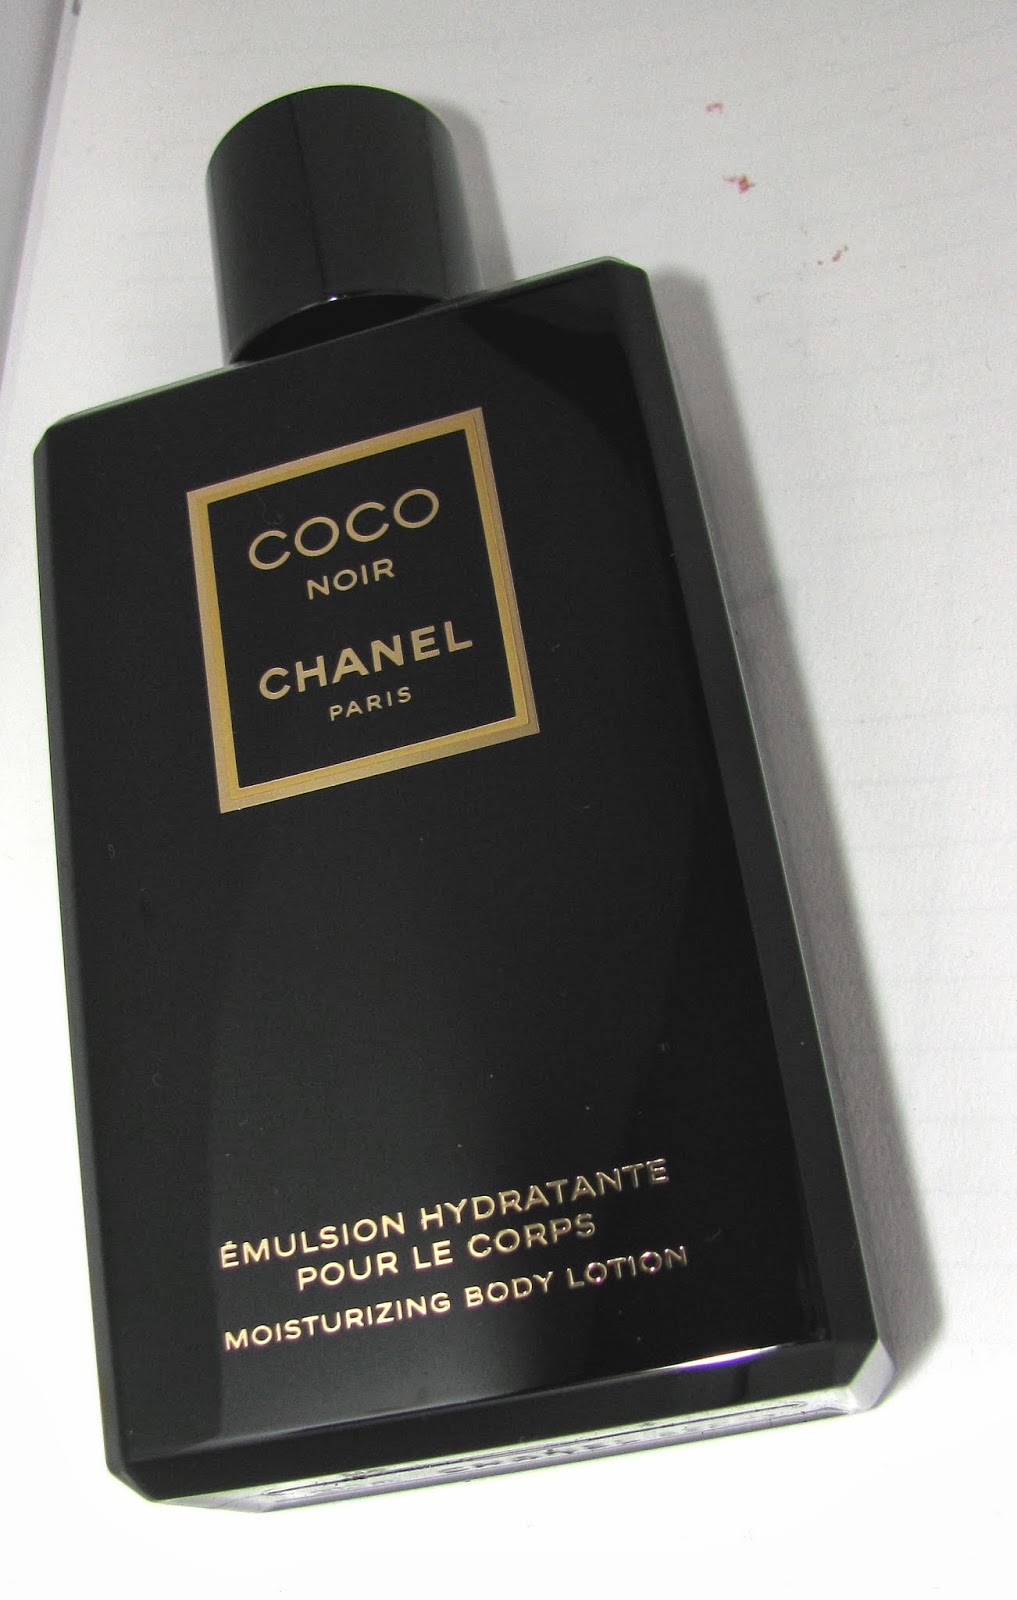 The Beauty Alchemist: Chanel Coco Noir Body Lotion